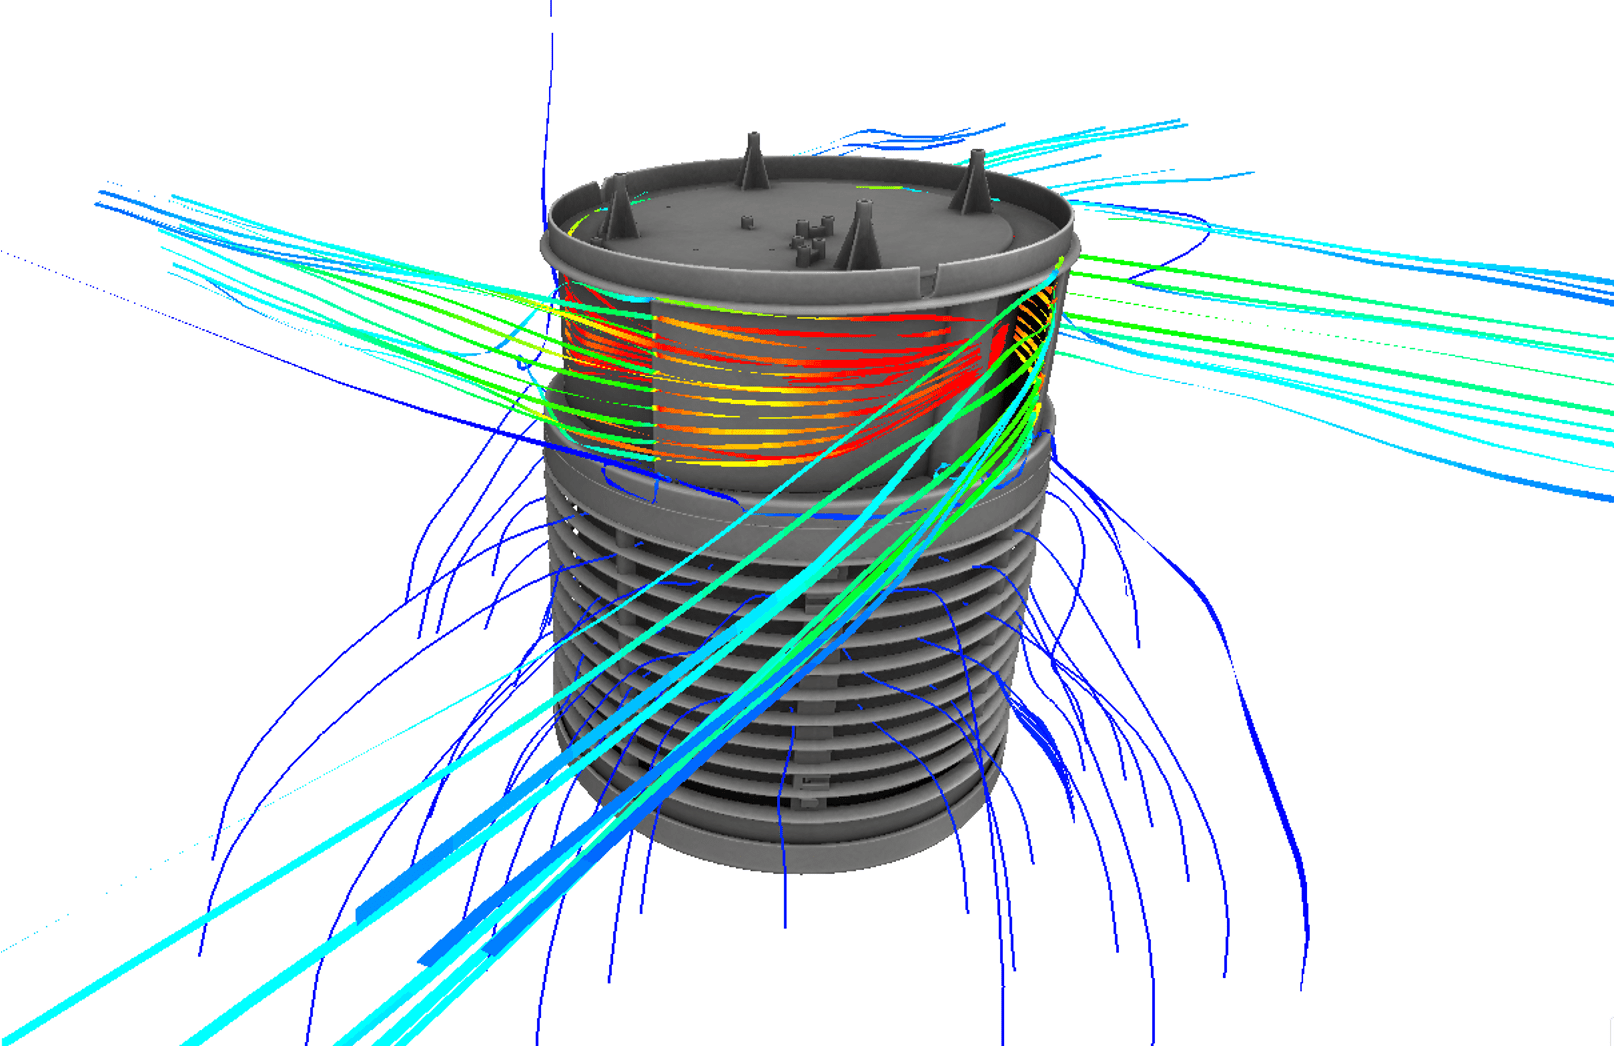 fluid dynamics simulations in 3D